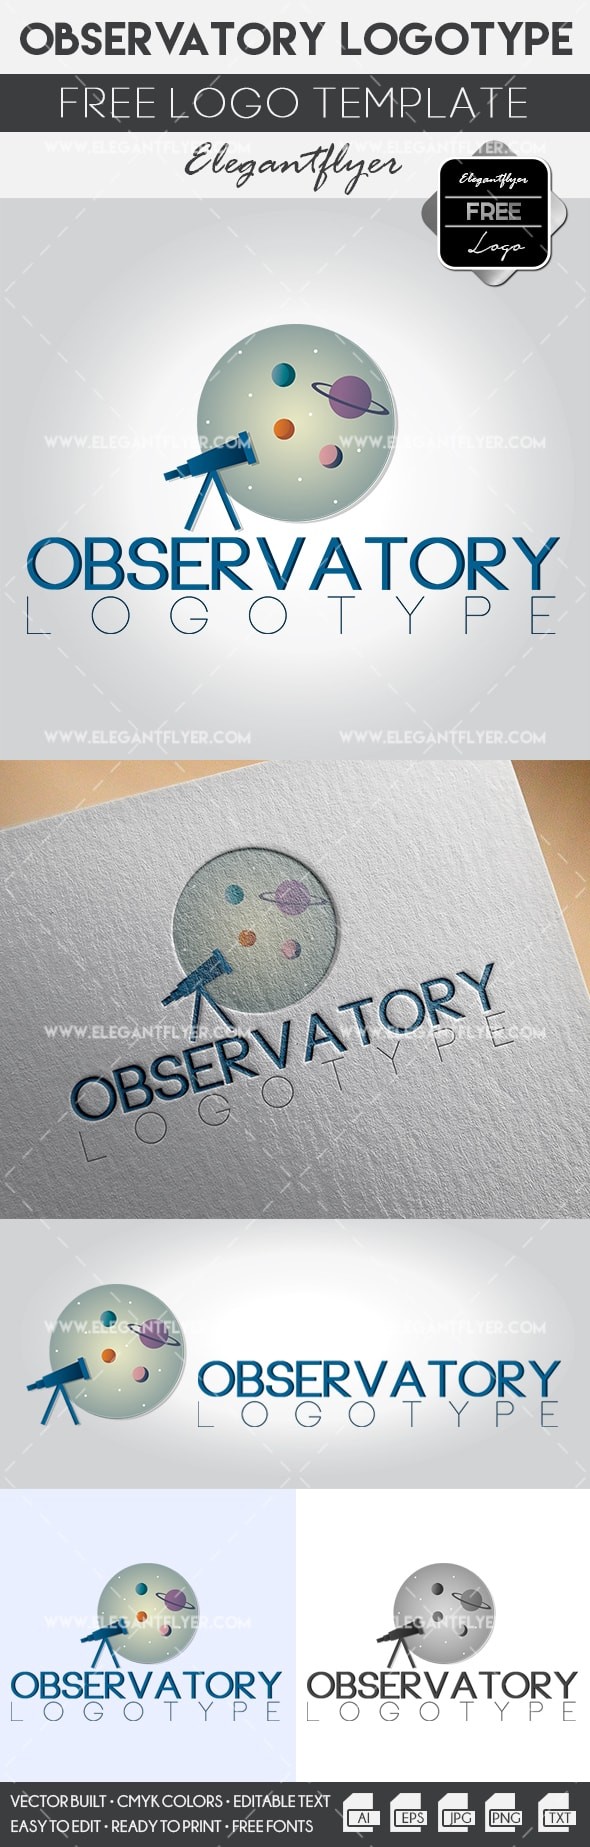 Observatory by ElegantFlyer